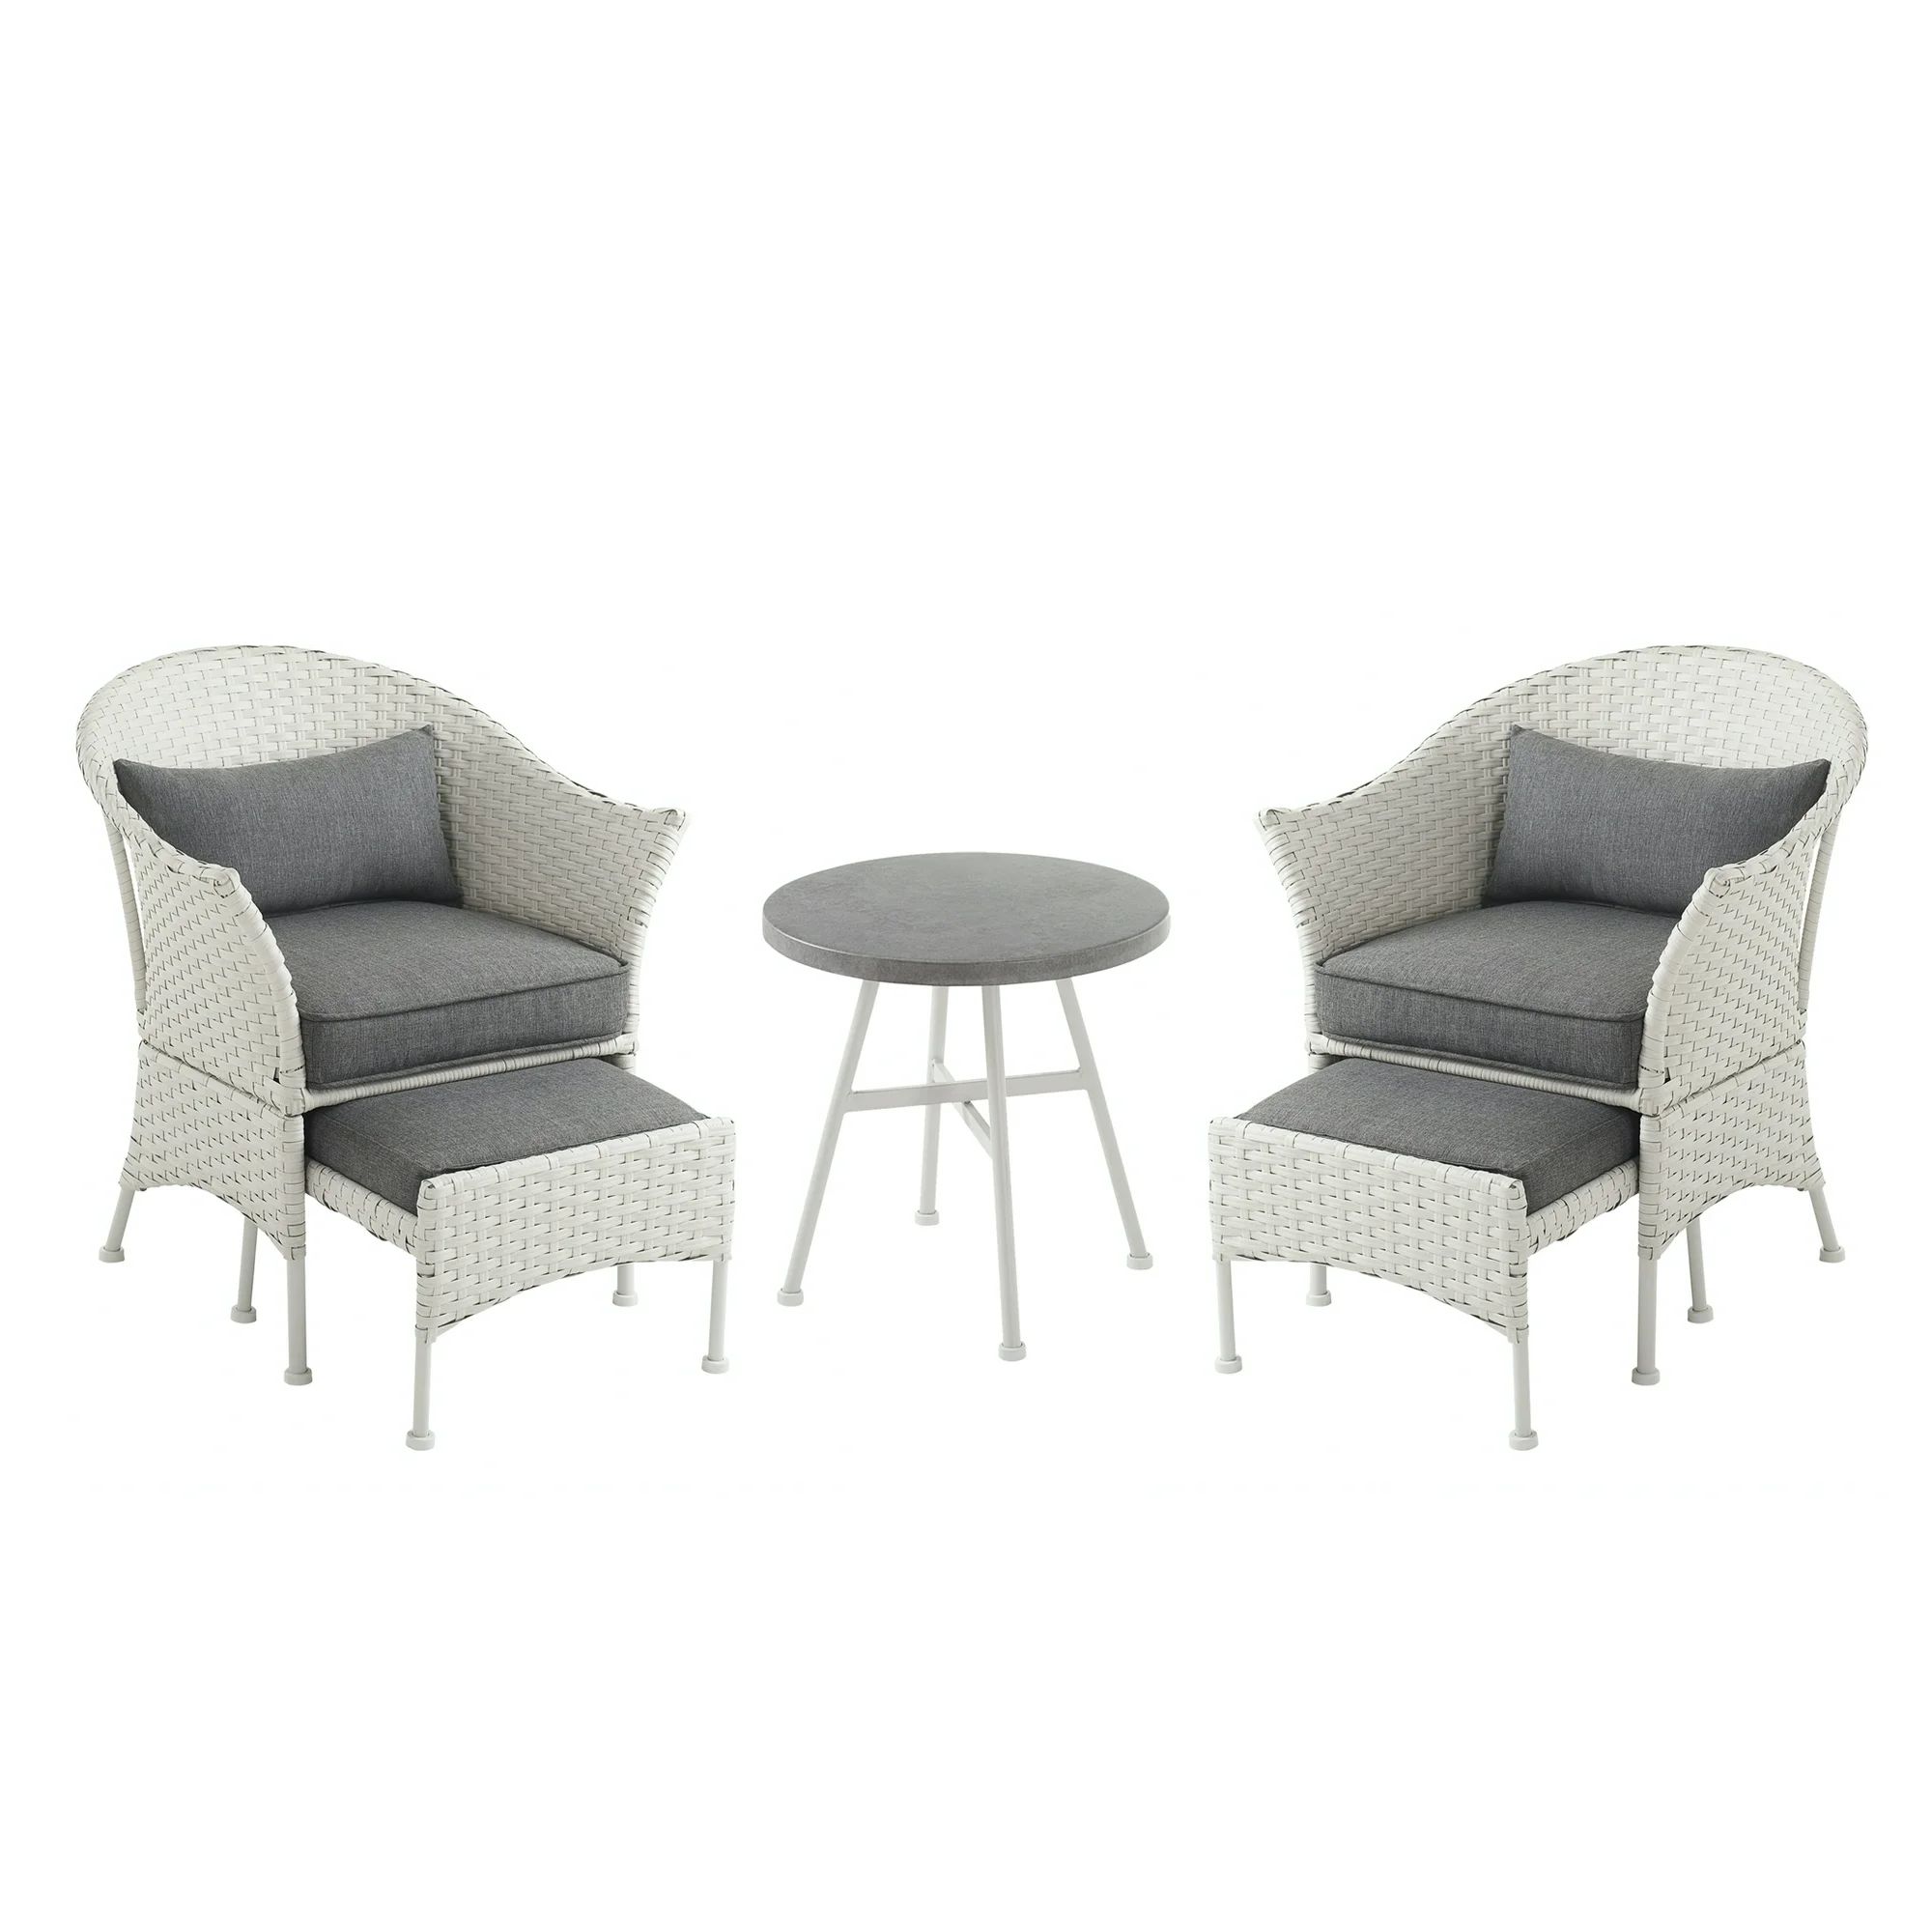 Mainstays Arlington Glen 5-Piece Outdoor Wicker Patio Furniture Set, White | Walmart (US)